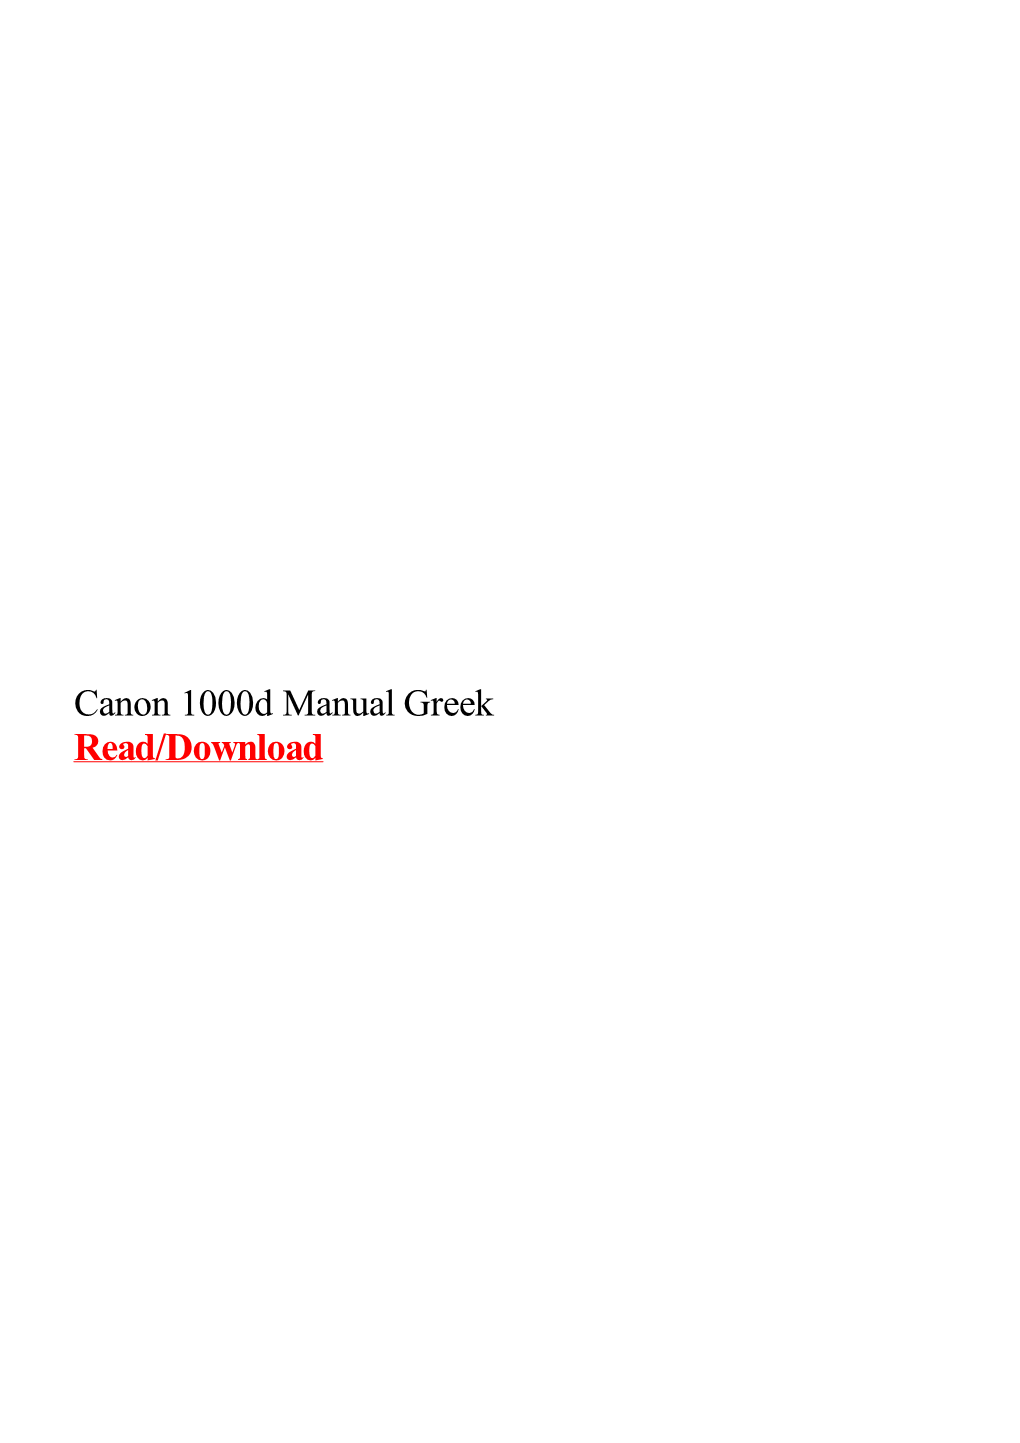 Canon 1000D Manual Greek